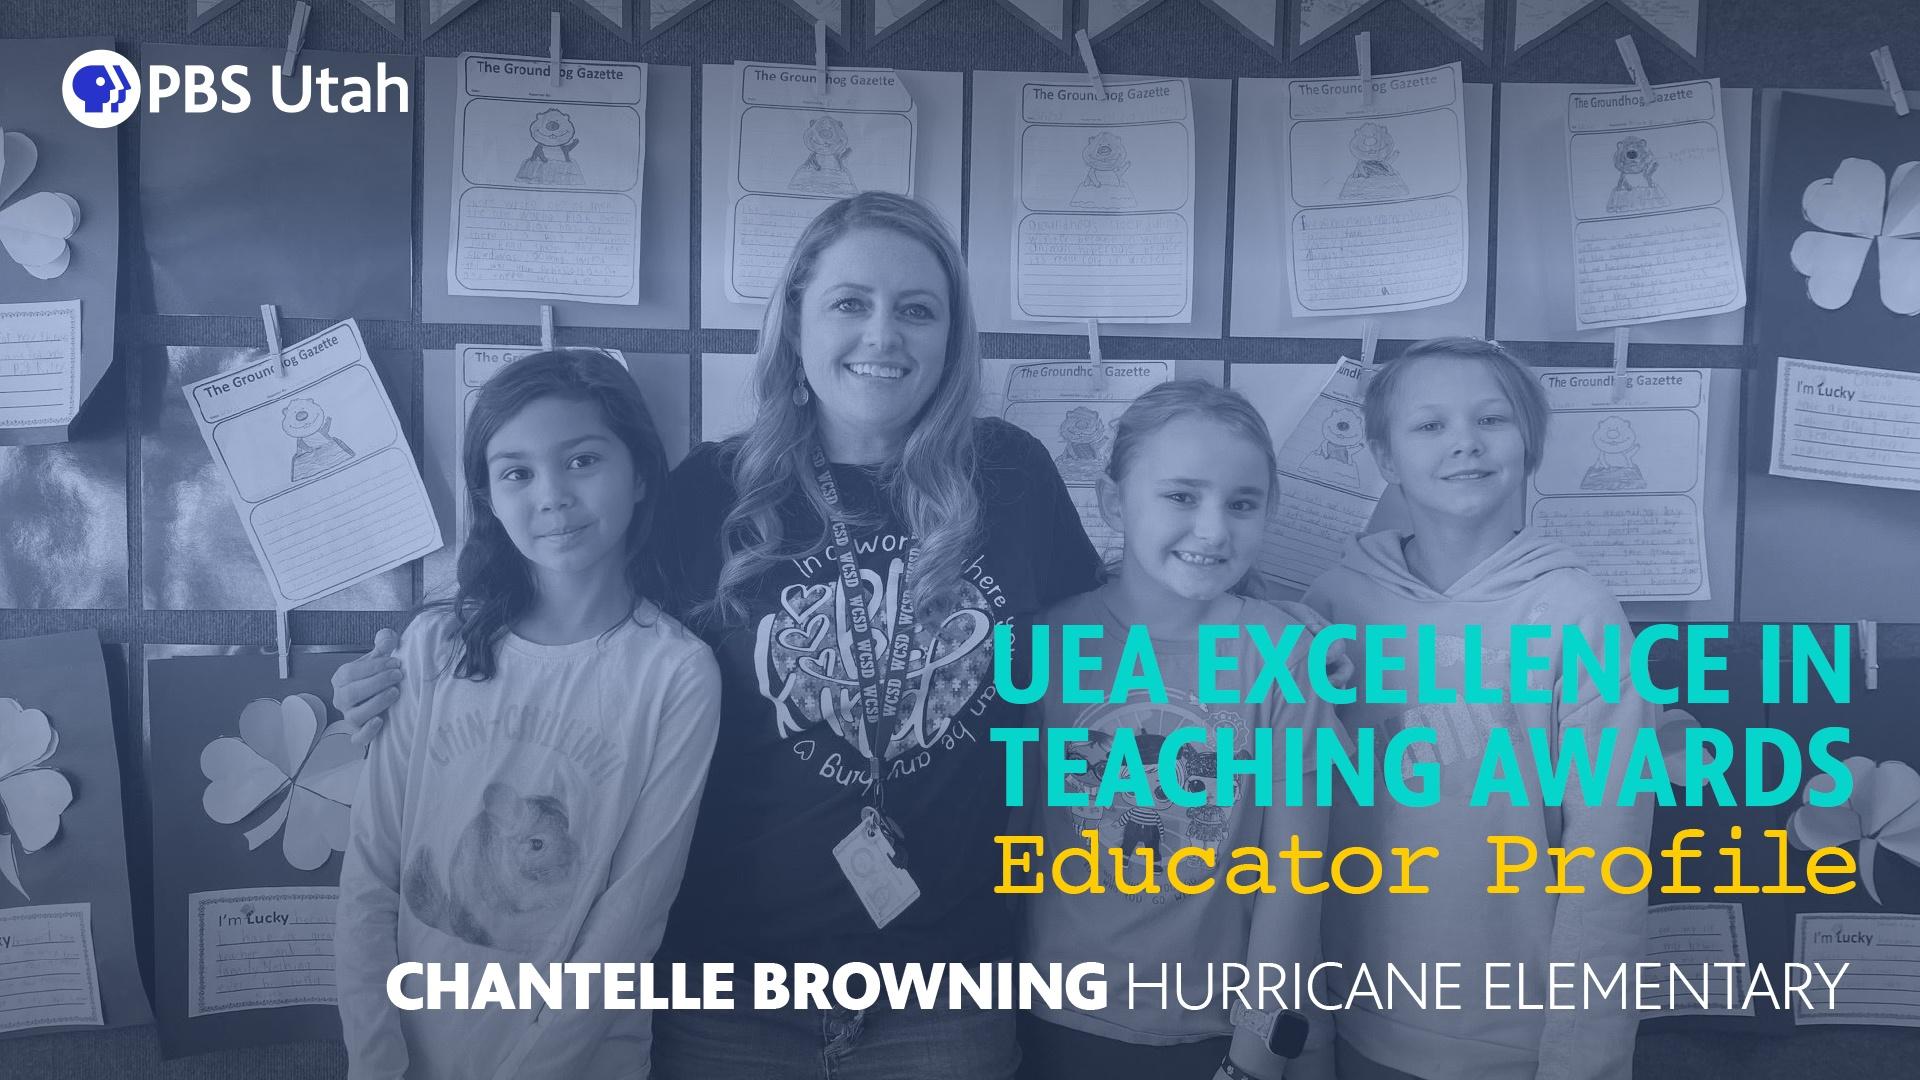 Chantelle Browning, Hurricane Elementary School